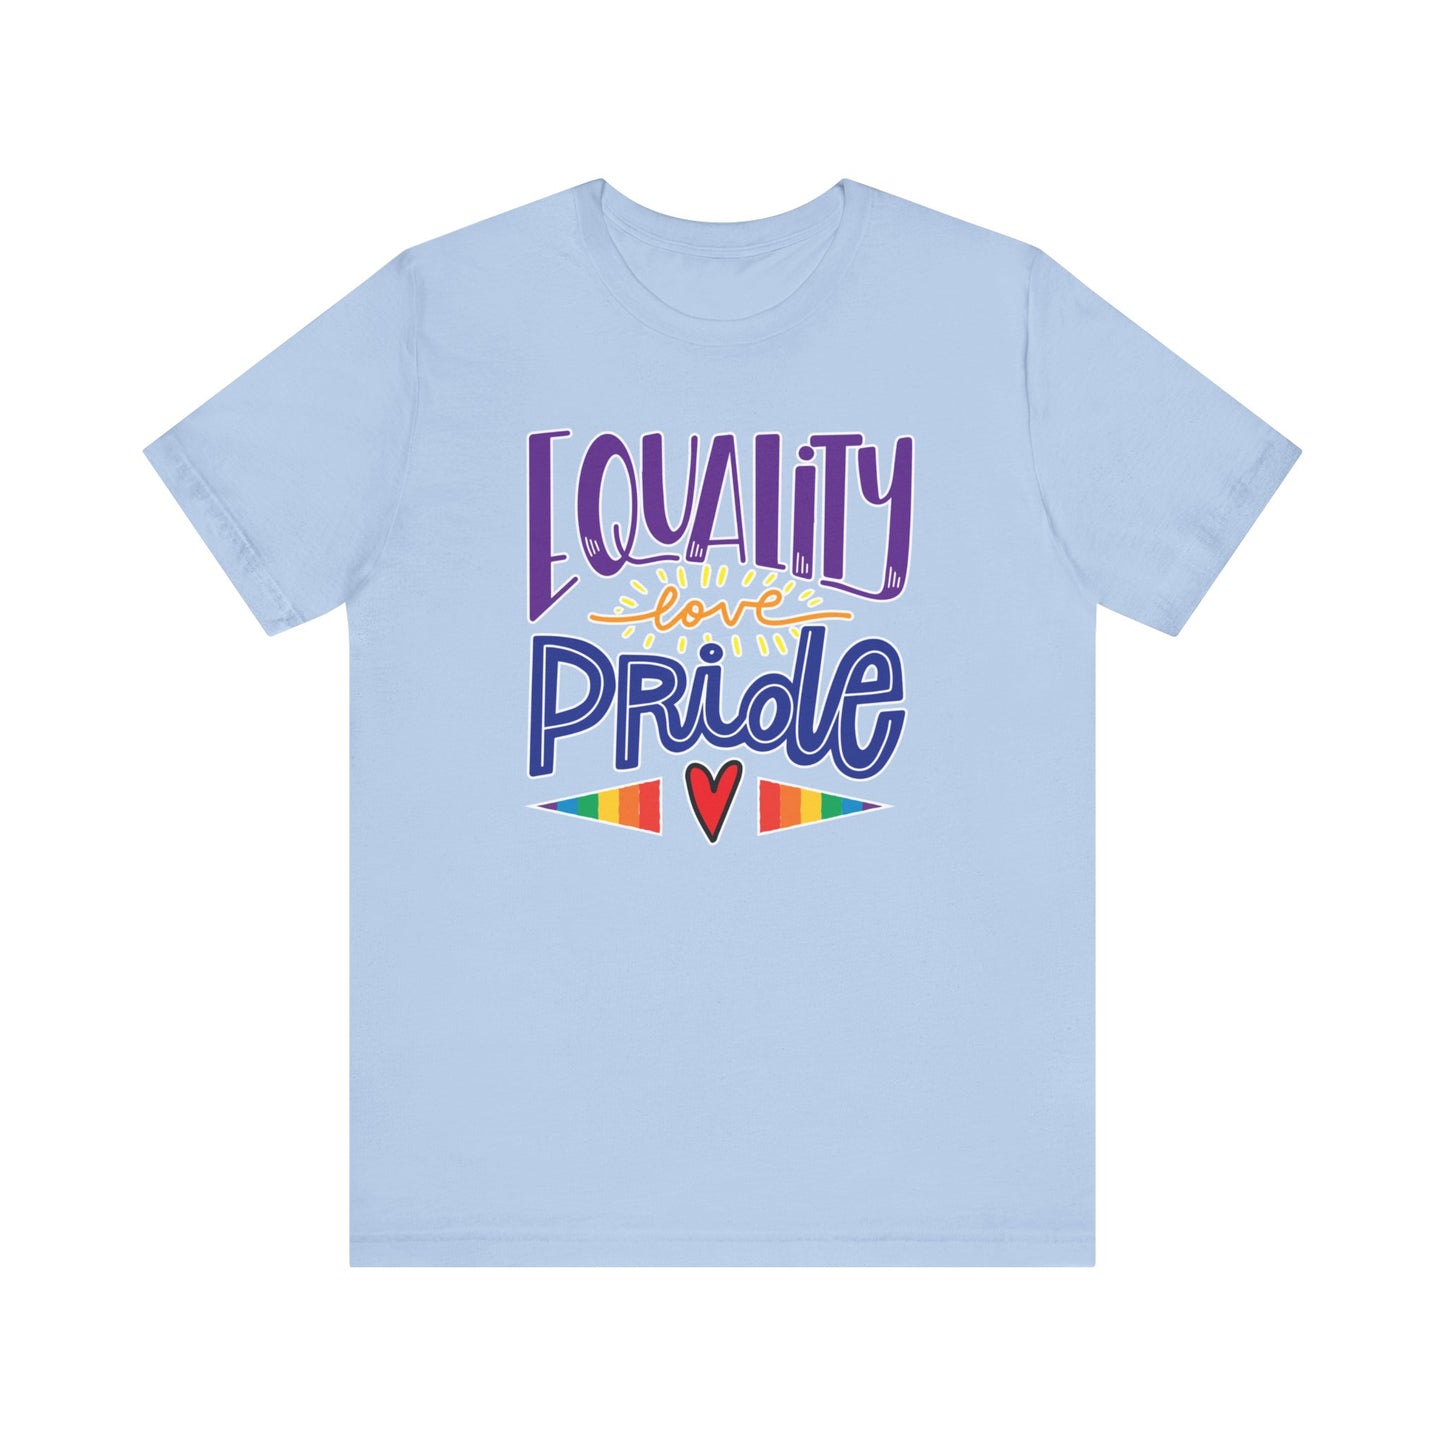 Equality, Love & Pride